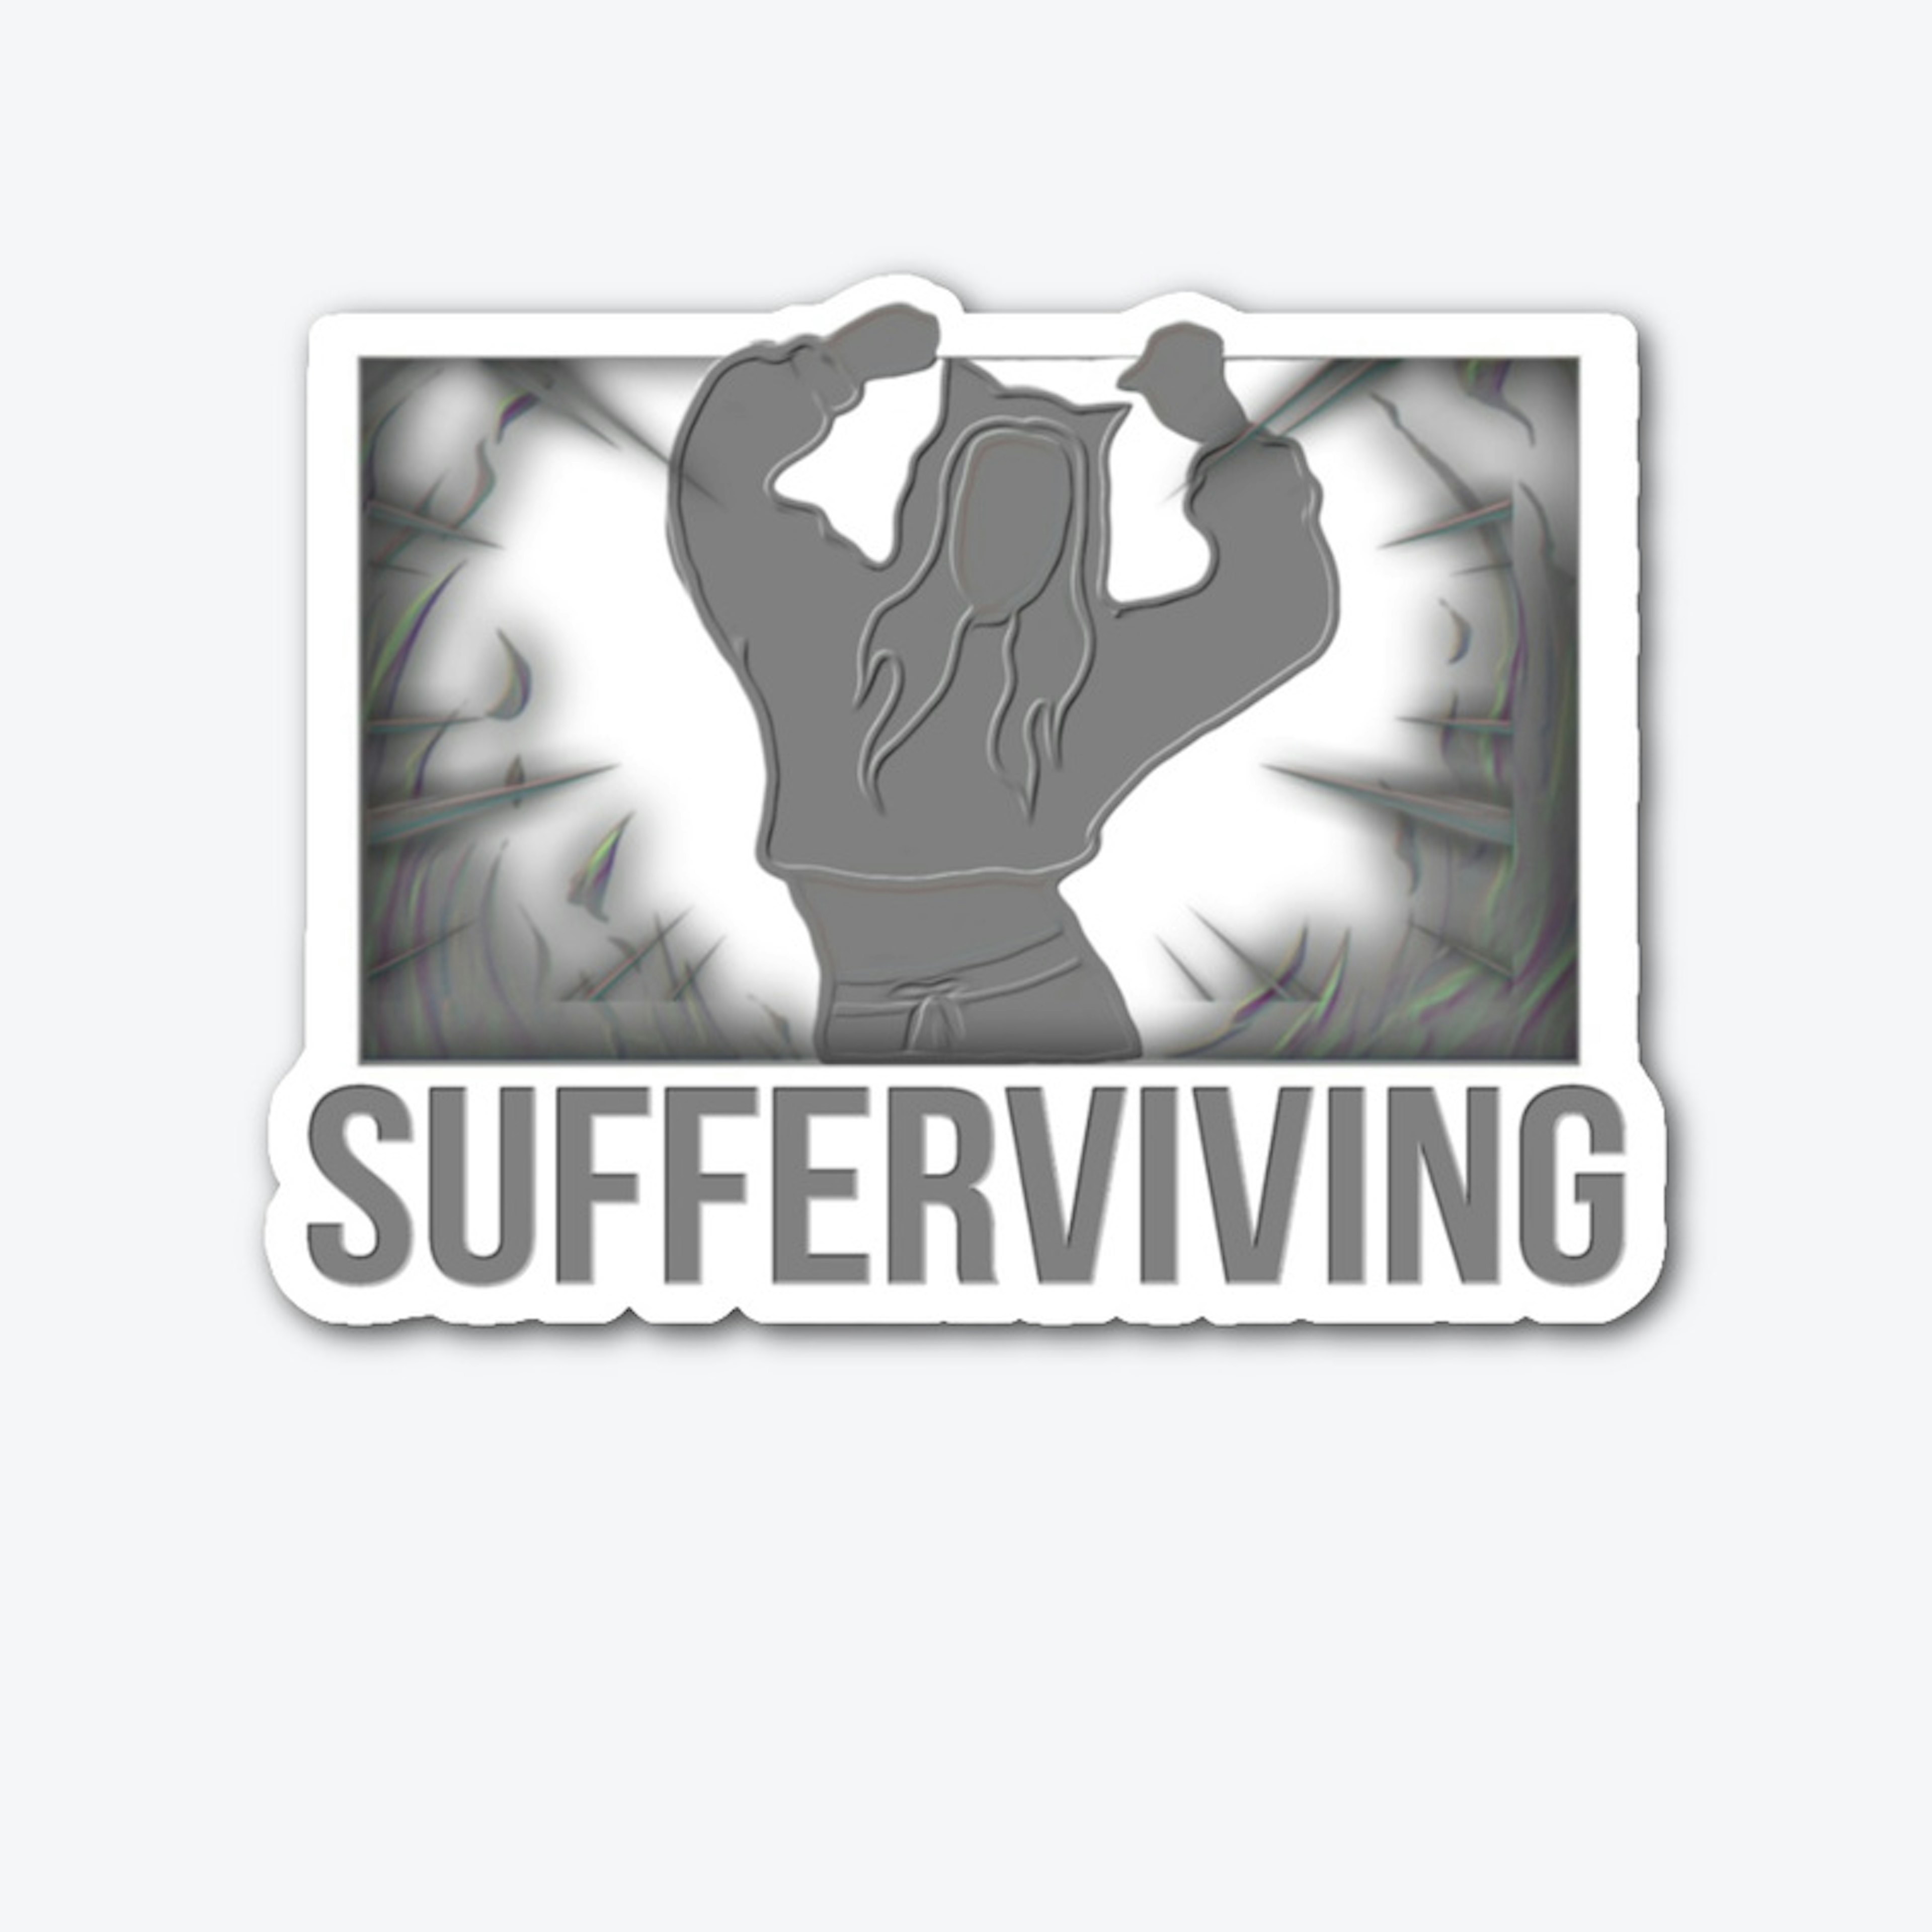 Sufferviving